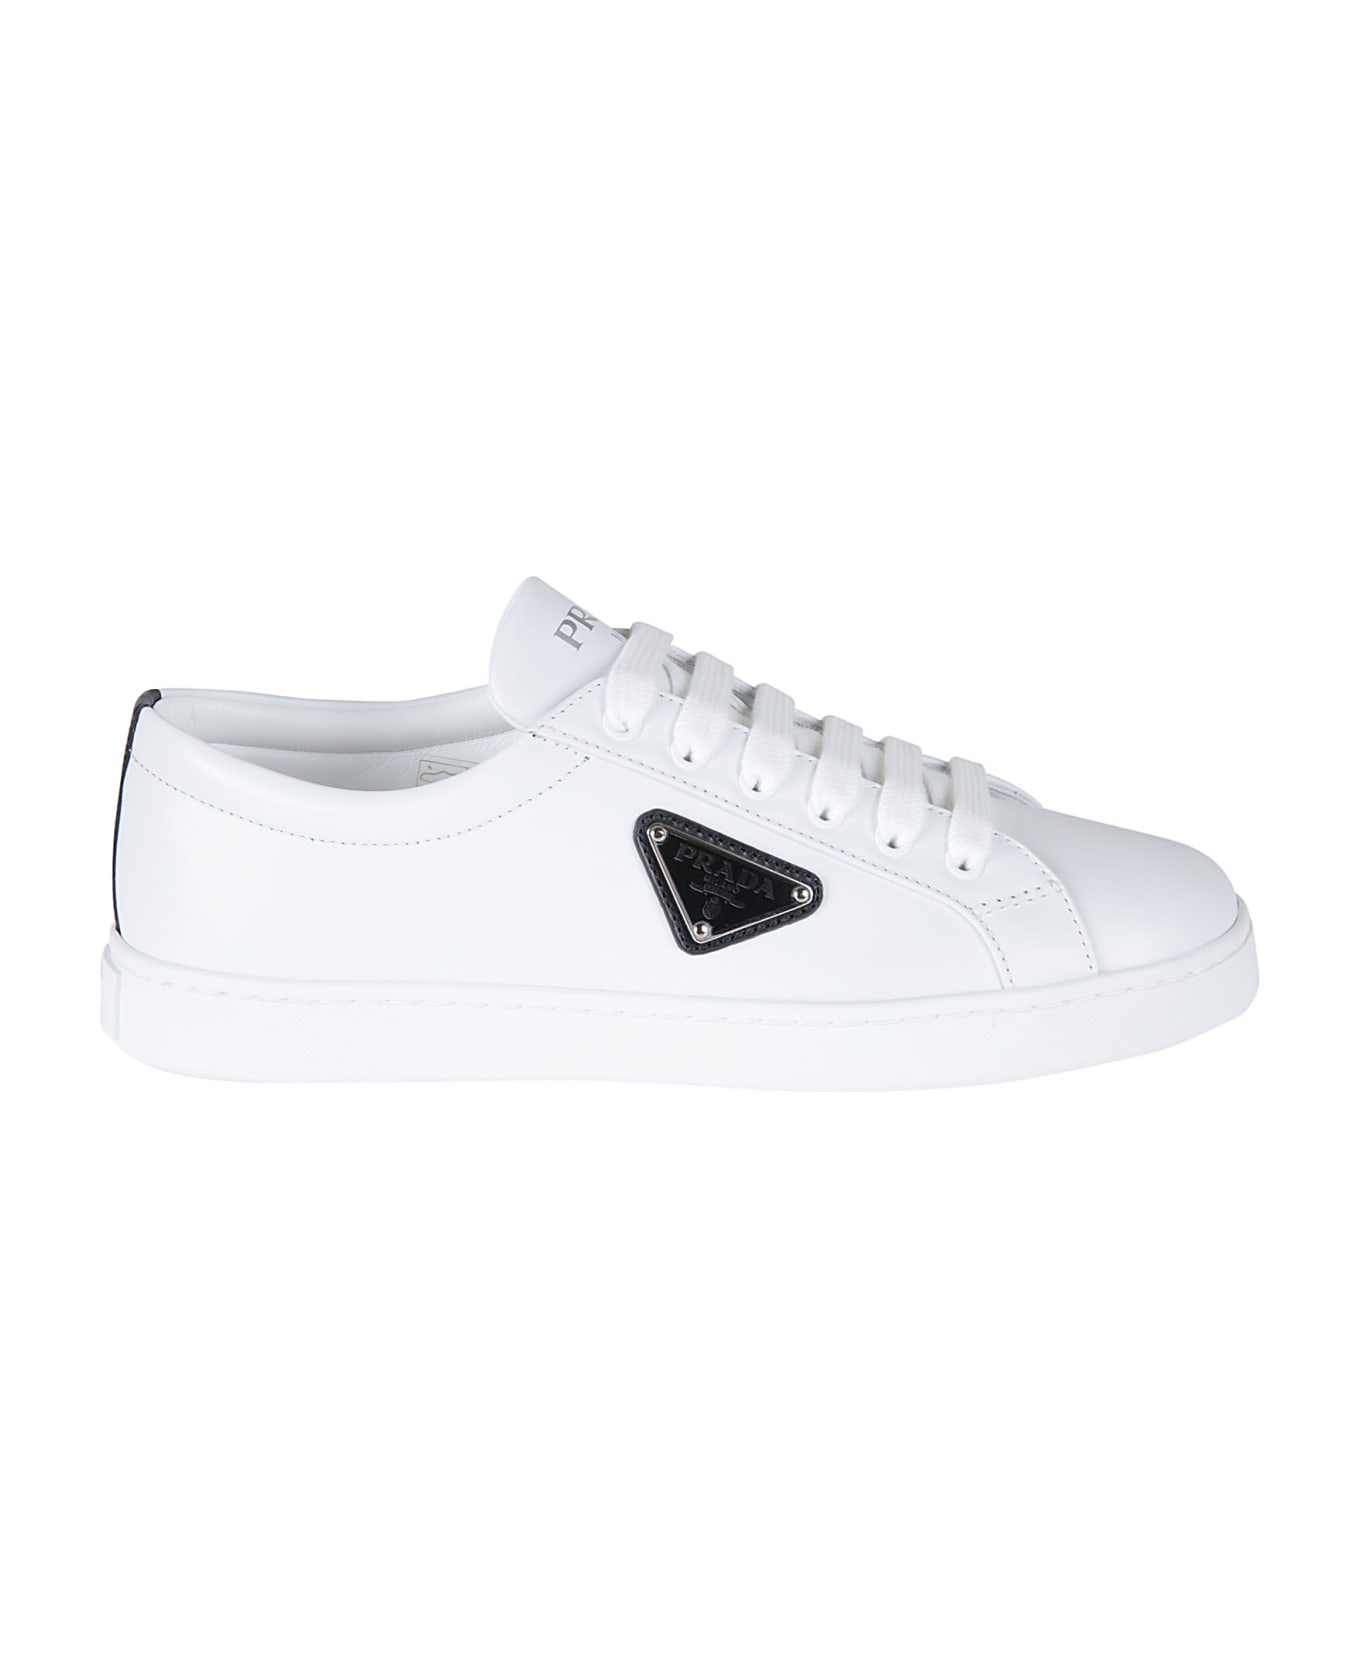 Prada Logo Plaque Sneakers - White/Black